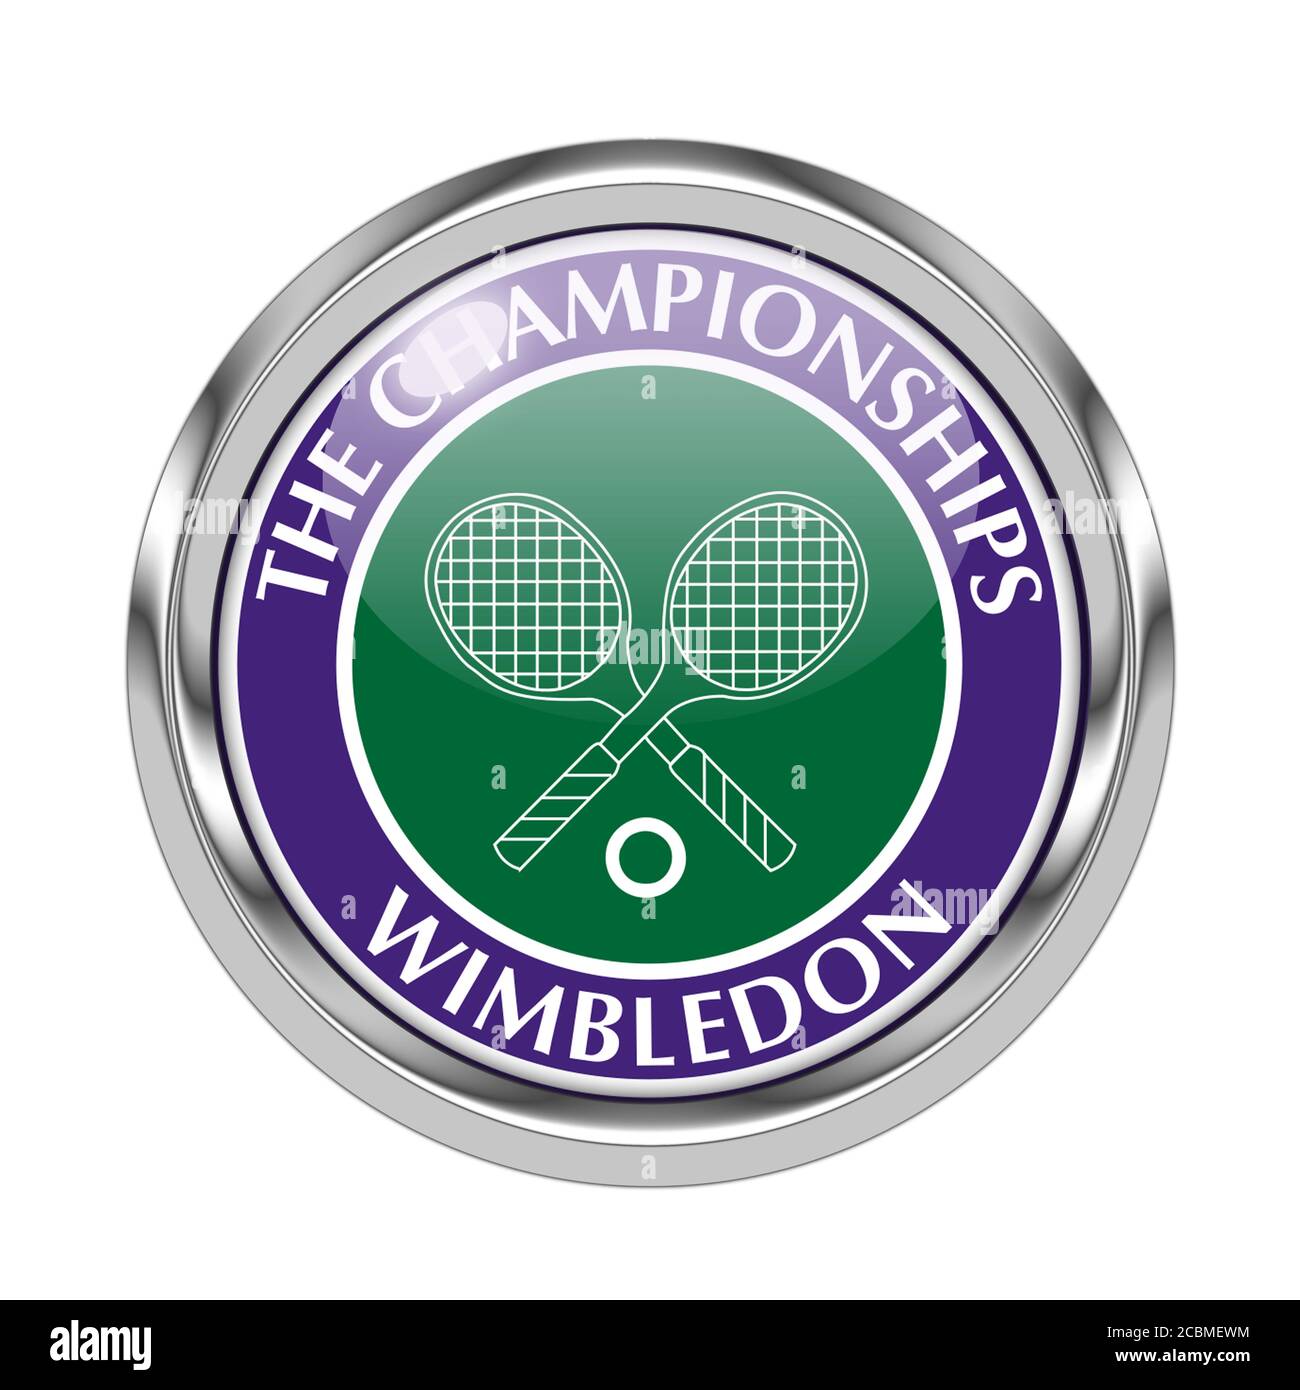 Wimbledon Foto de stock